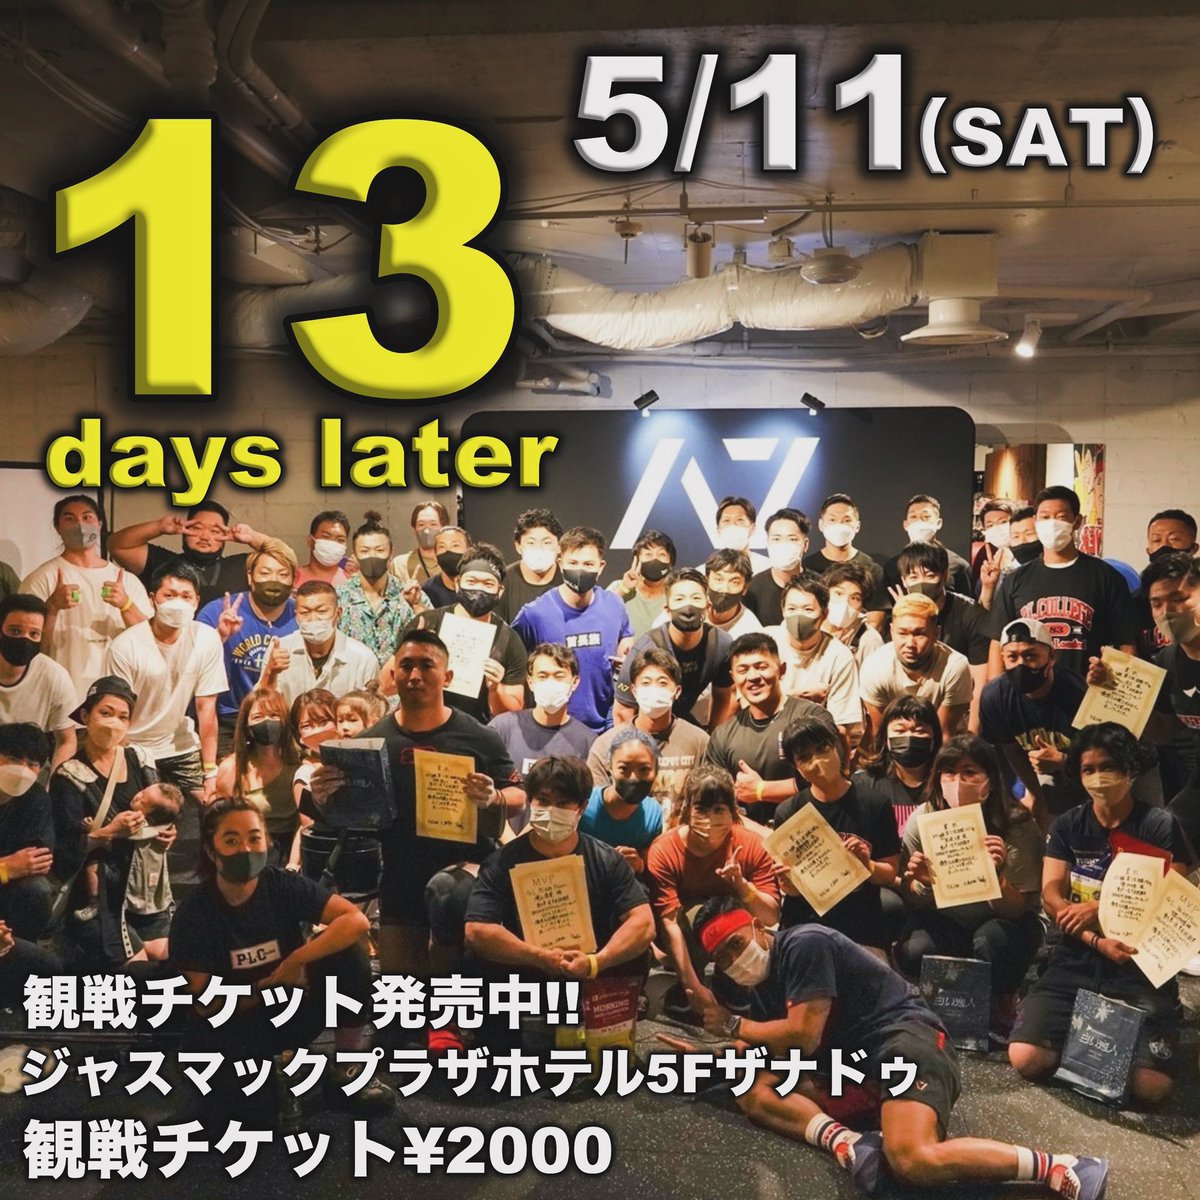 GRAVITYREBELLIONFESTIVALまで 「13日！」 チケット絶賛発売中！ t.livepocket.jp/e/kgall